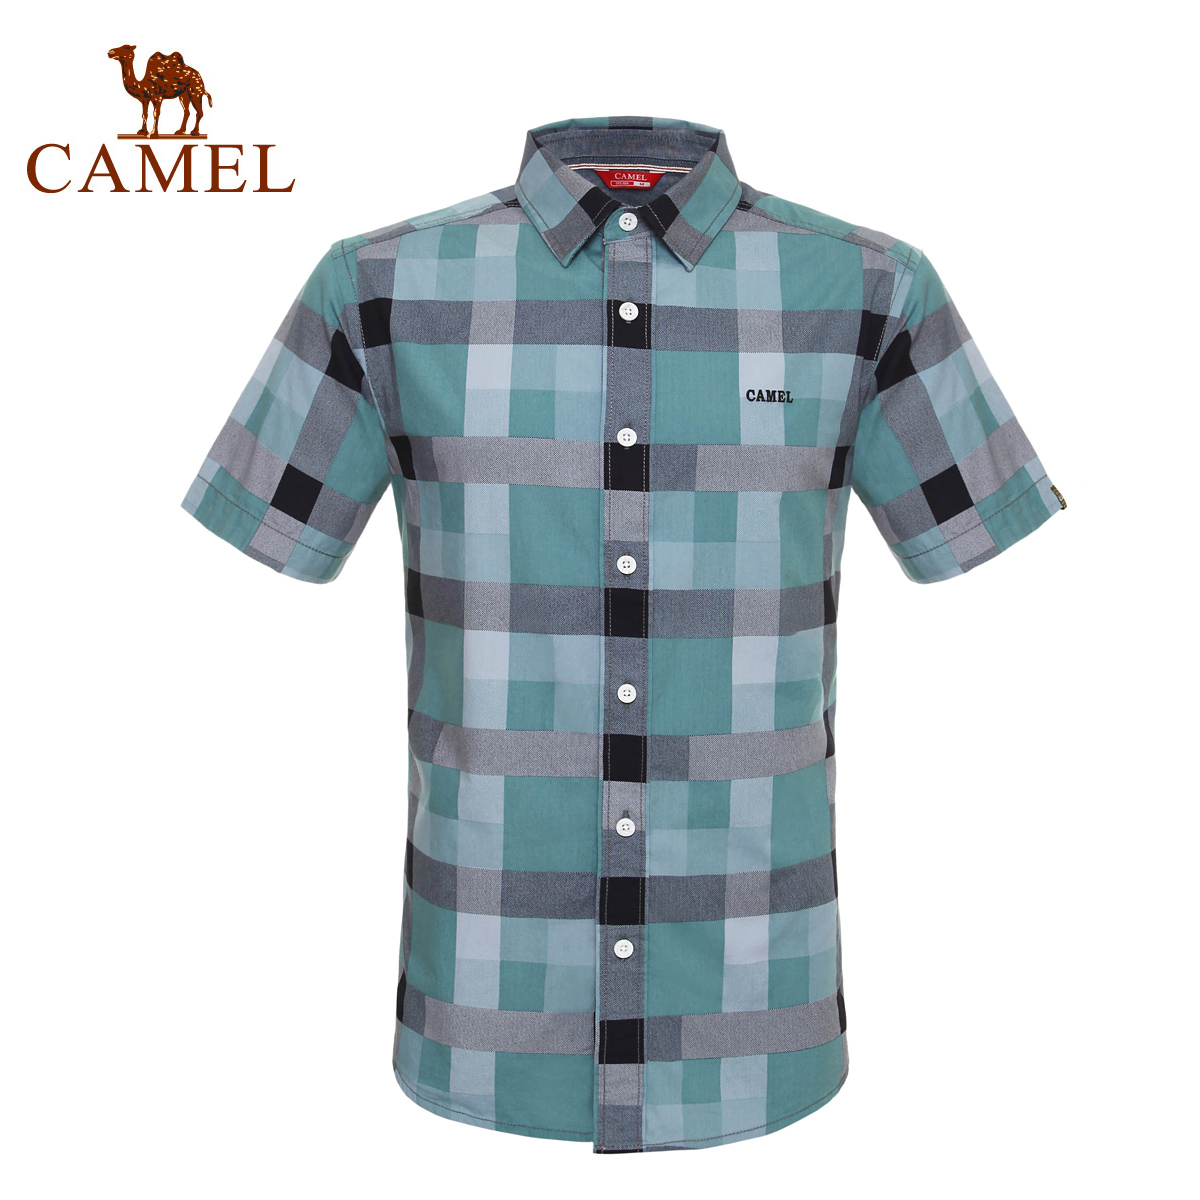 For camel outdoor casual shirt Men 2014 short-sleeve shirt cotton shirt male